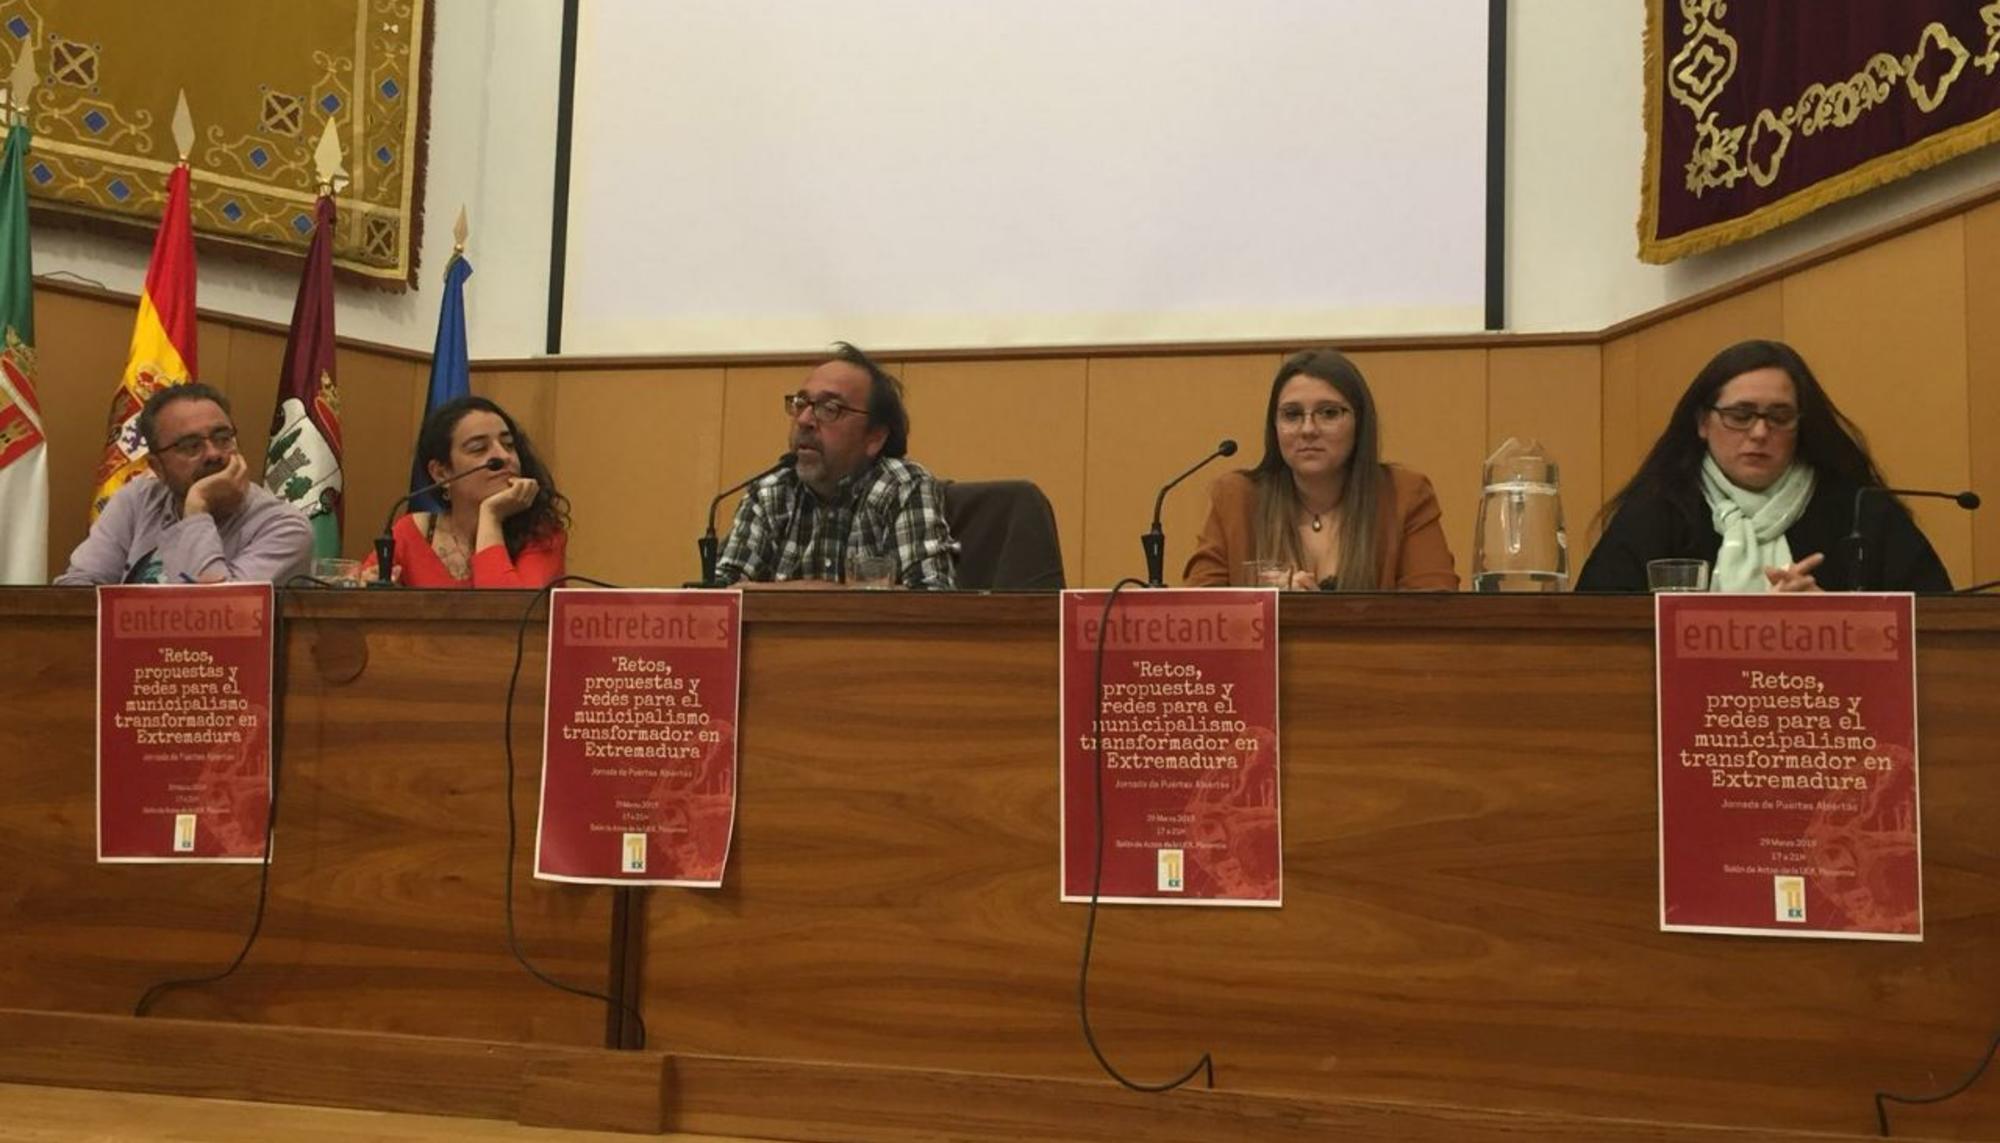 municipalismo Extremadura entretantos